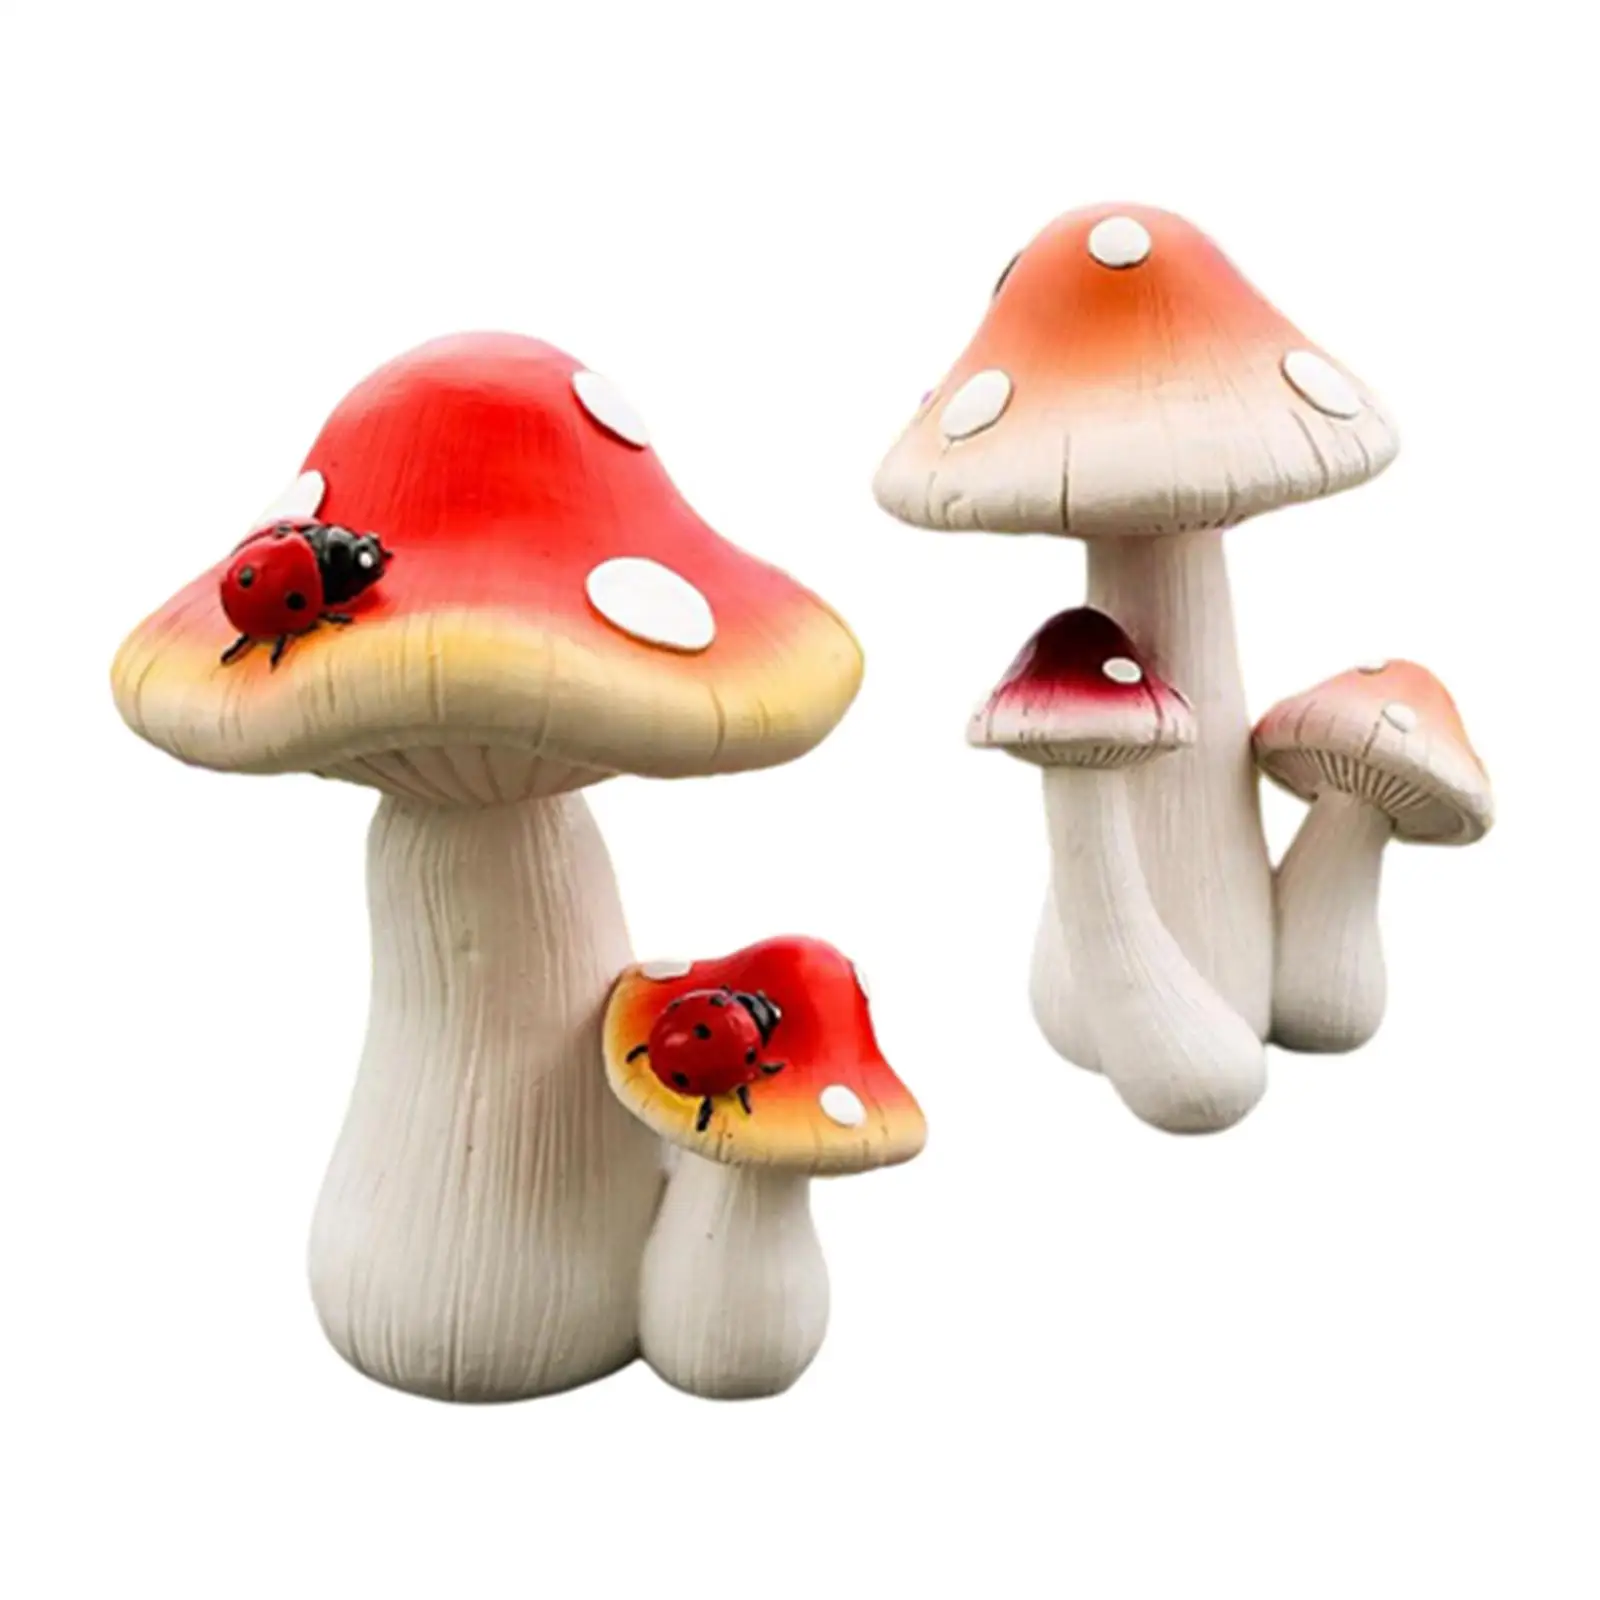 Simulation Mushroom Statue Mushroom Figures Miniature Mushroom Sculpture for Garden Home Outdoor Indoor Courtyard Ornament